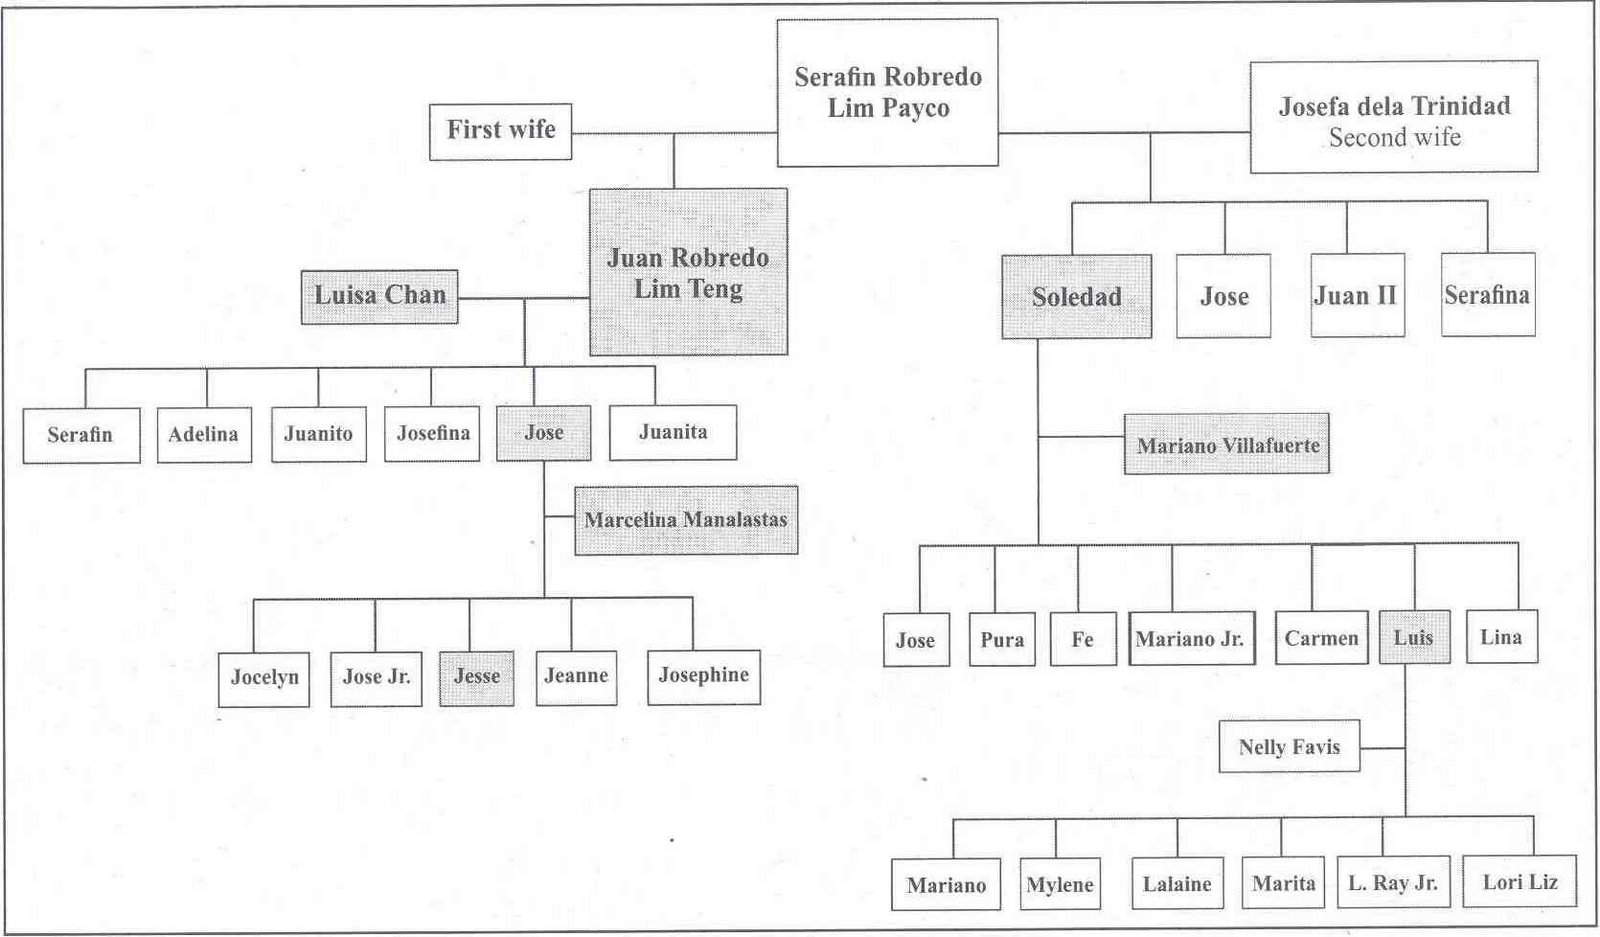 [genealogy.jpg]